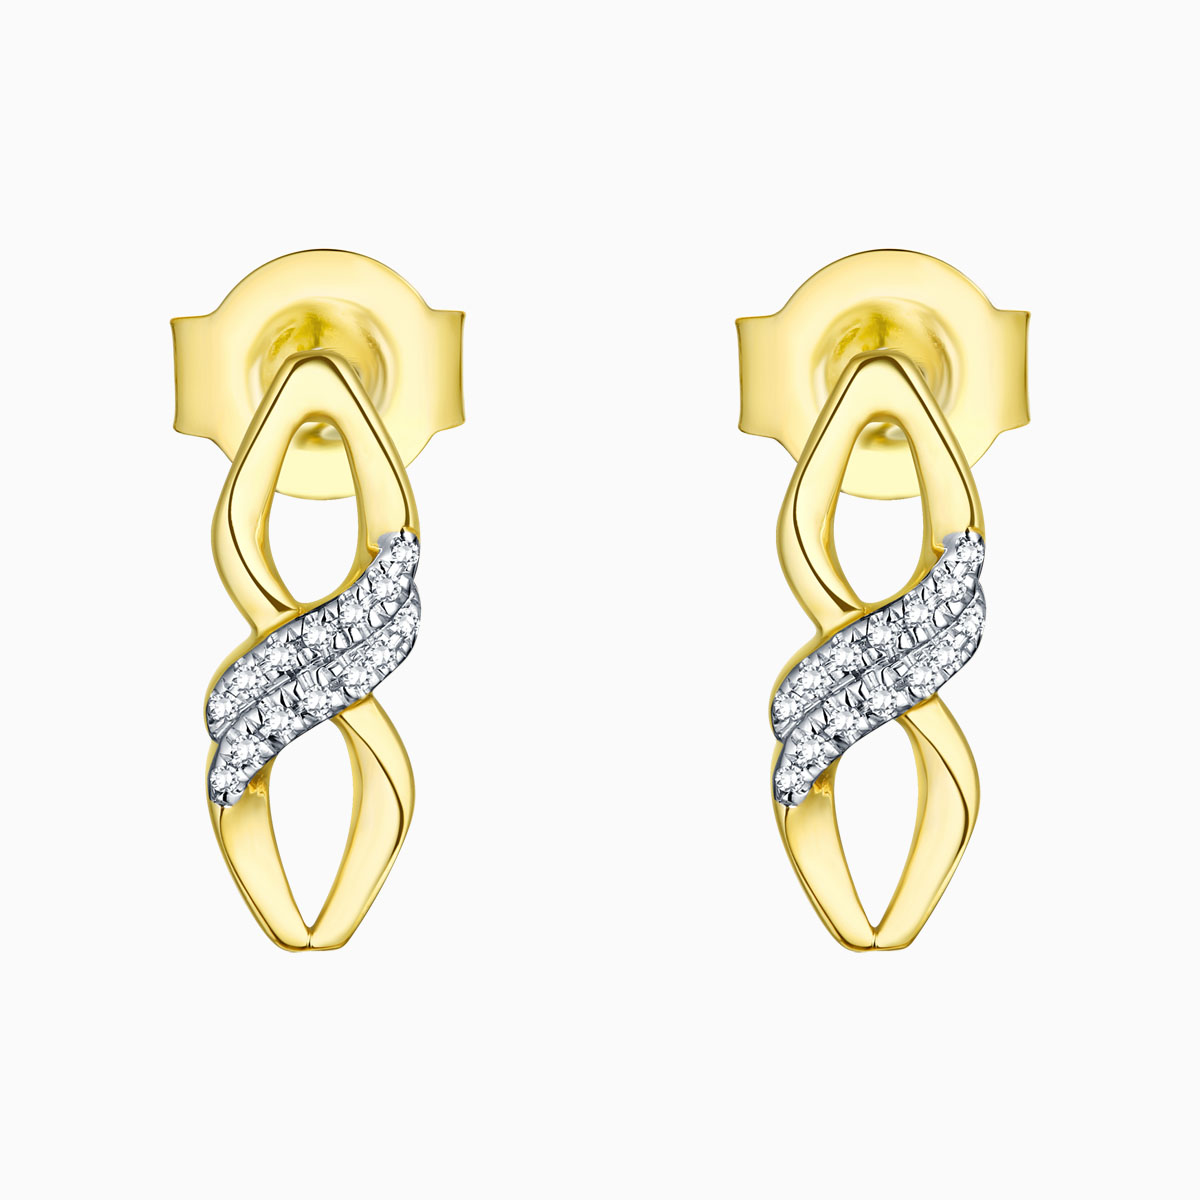 E13559WHT- 14K Yellow Gold Diamond Earrings, 0.04 TCW